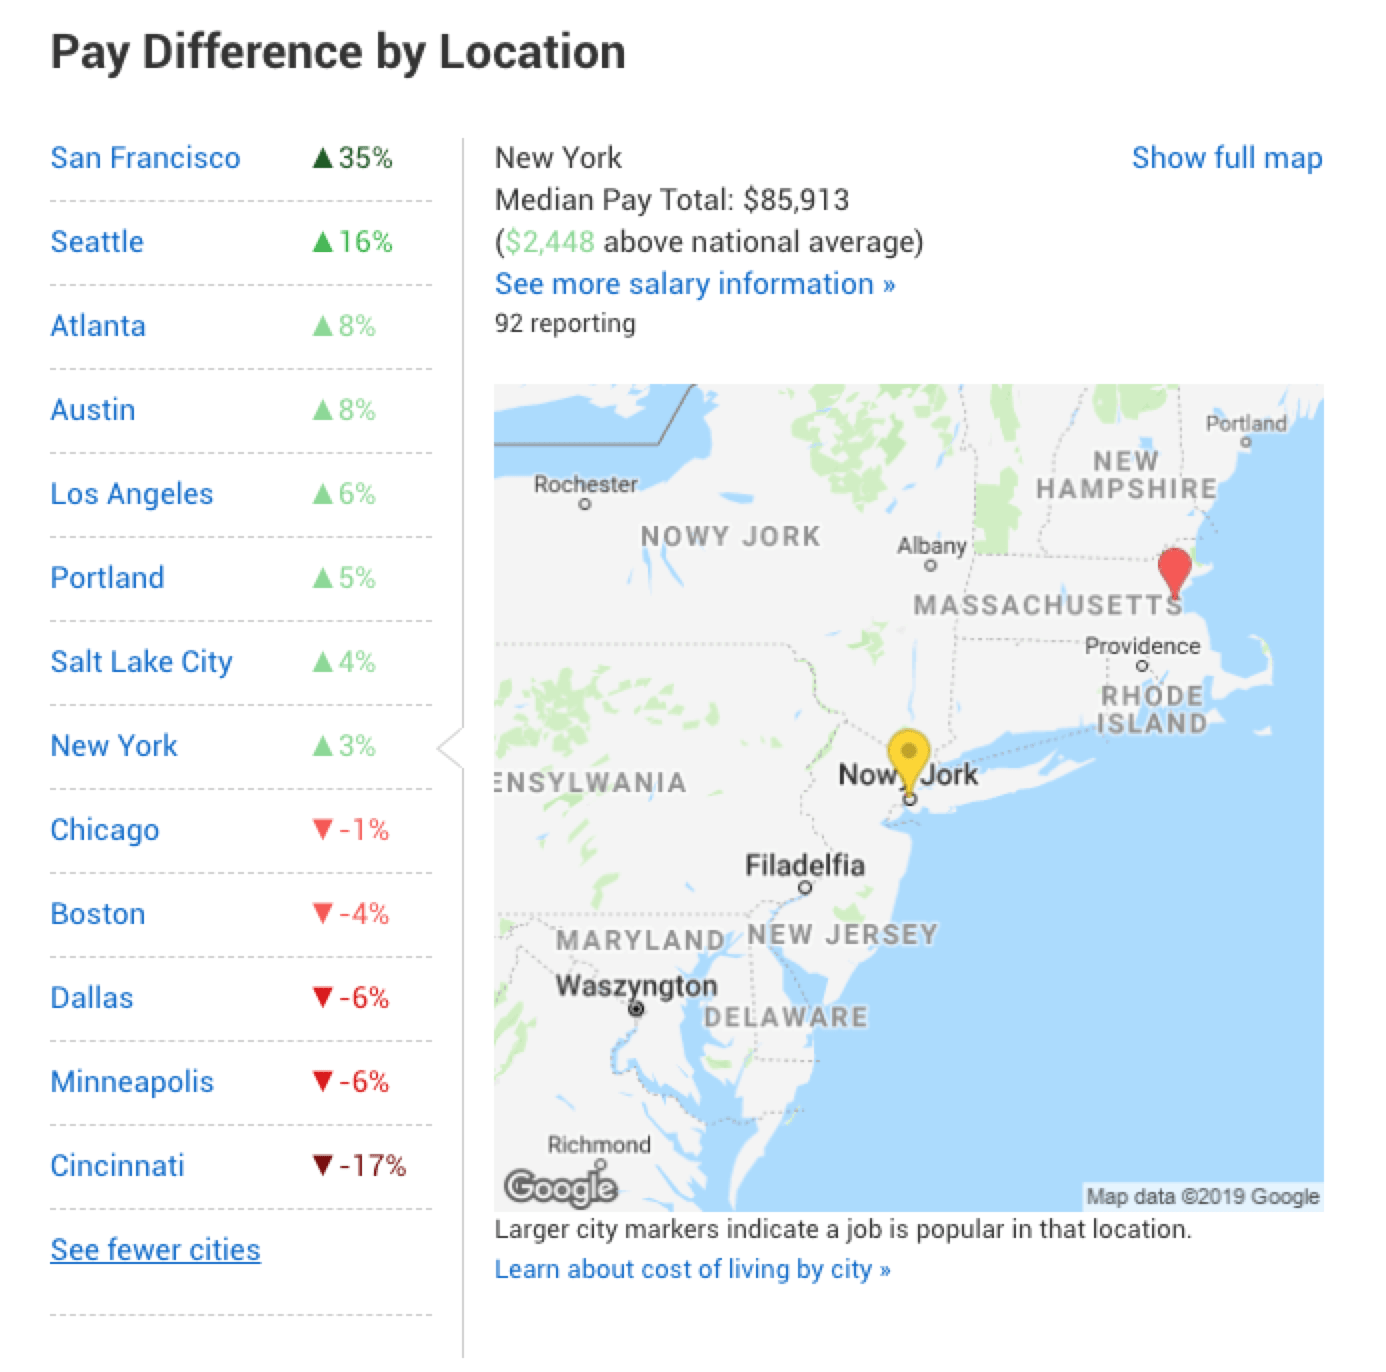 iOS developer salary based on location